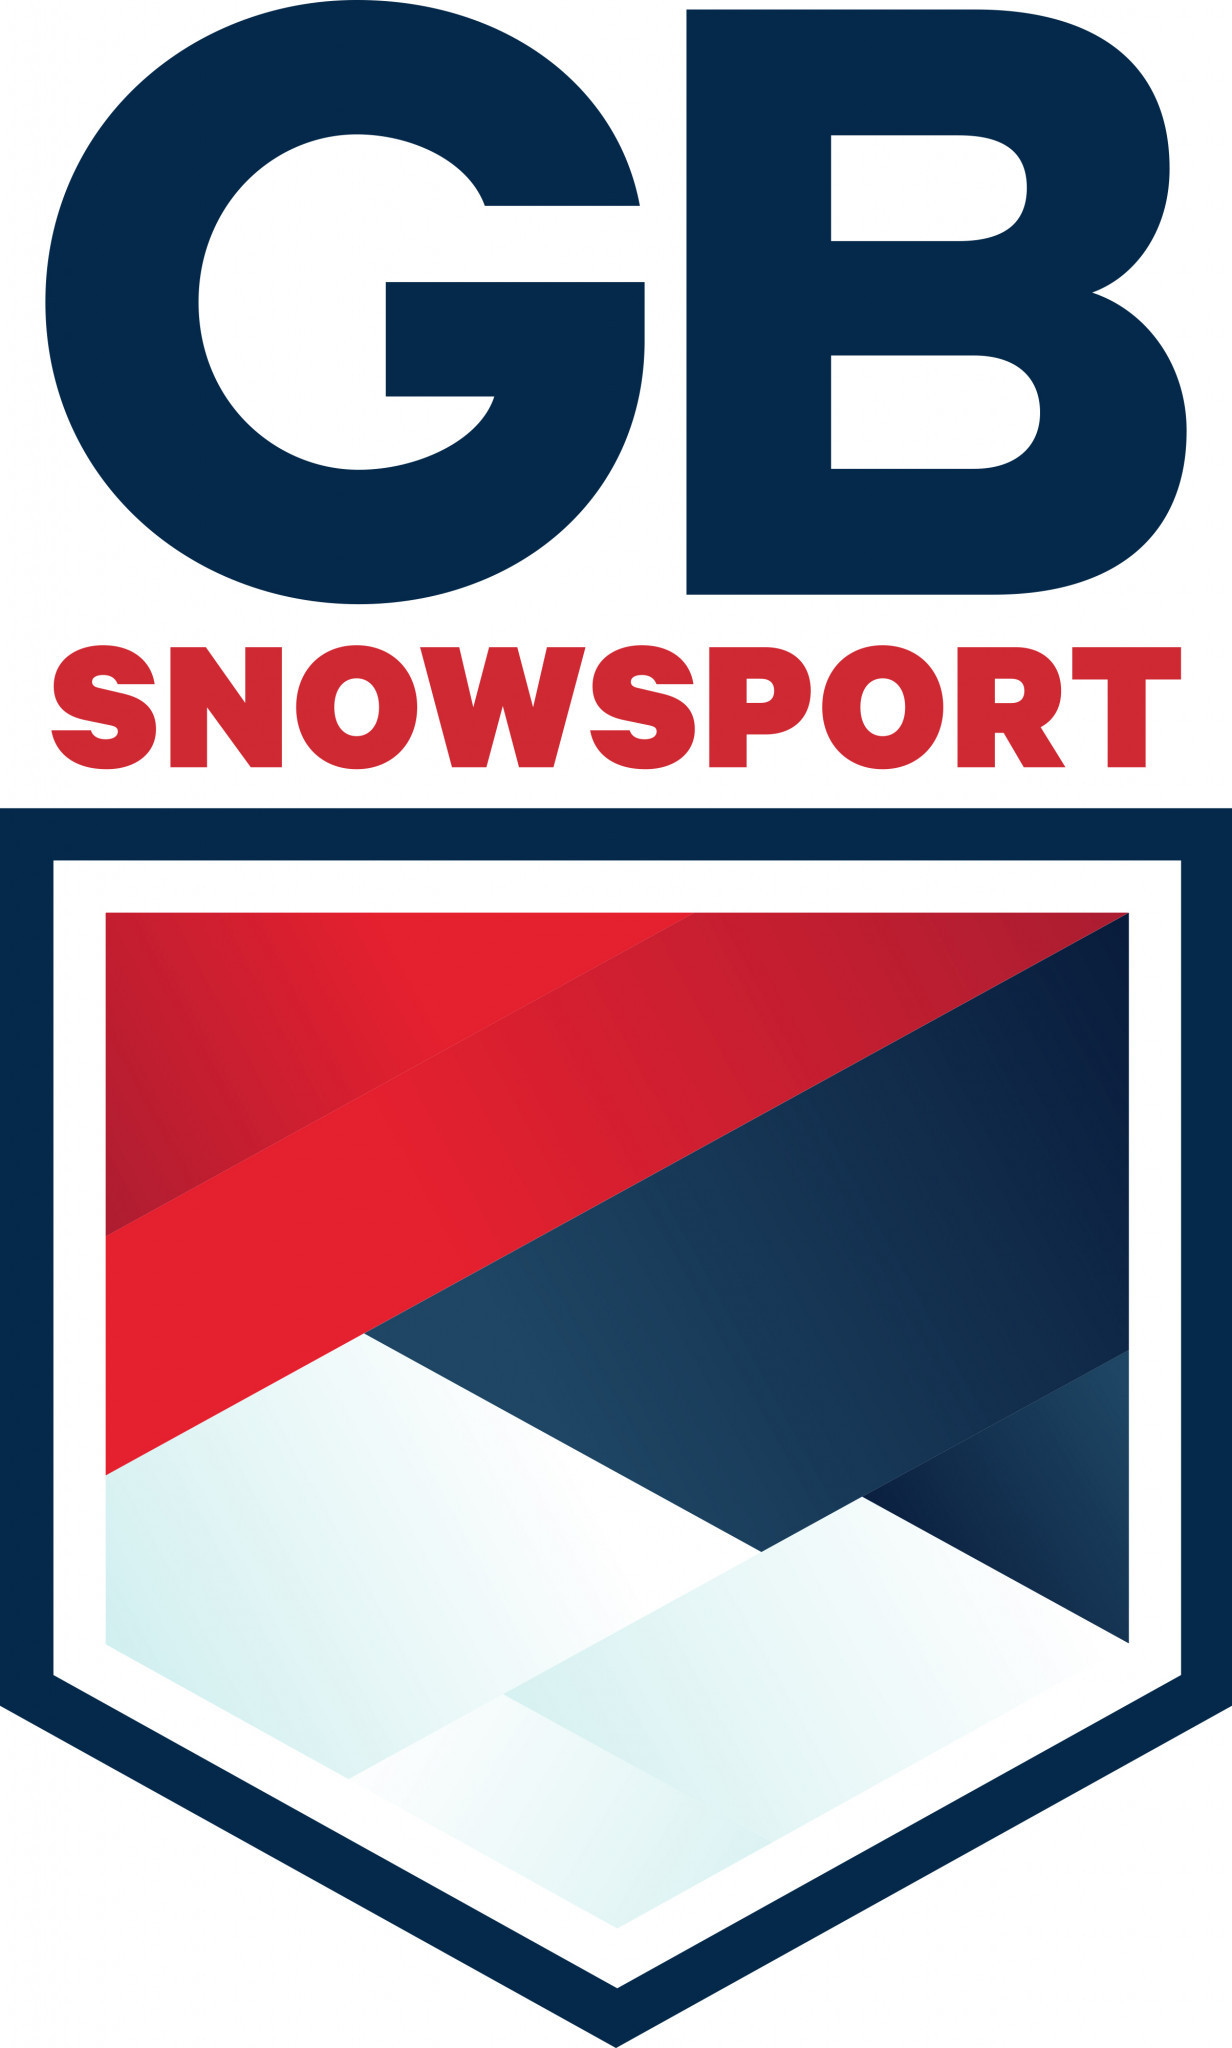 British Ski and Snowboard rebrands to GB Snowsport to become more inclusive